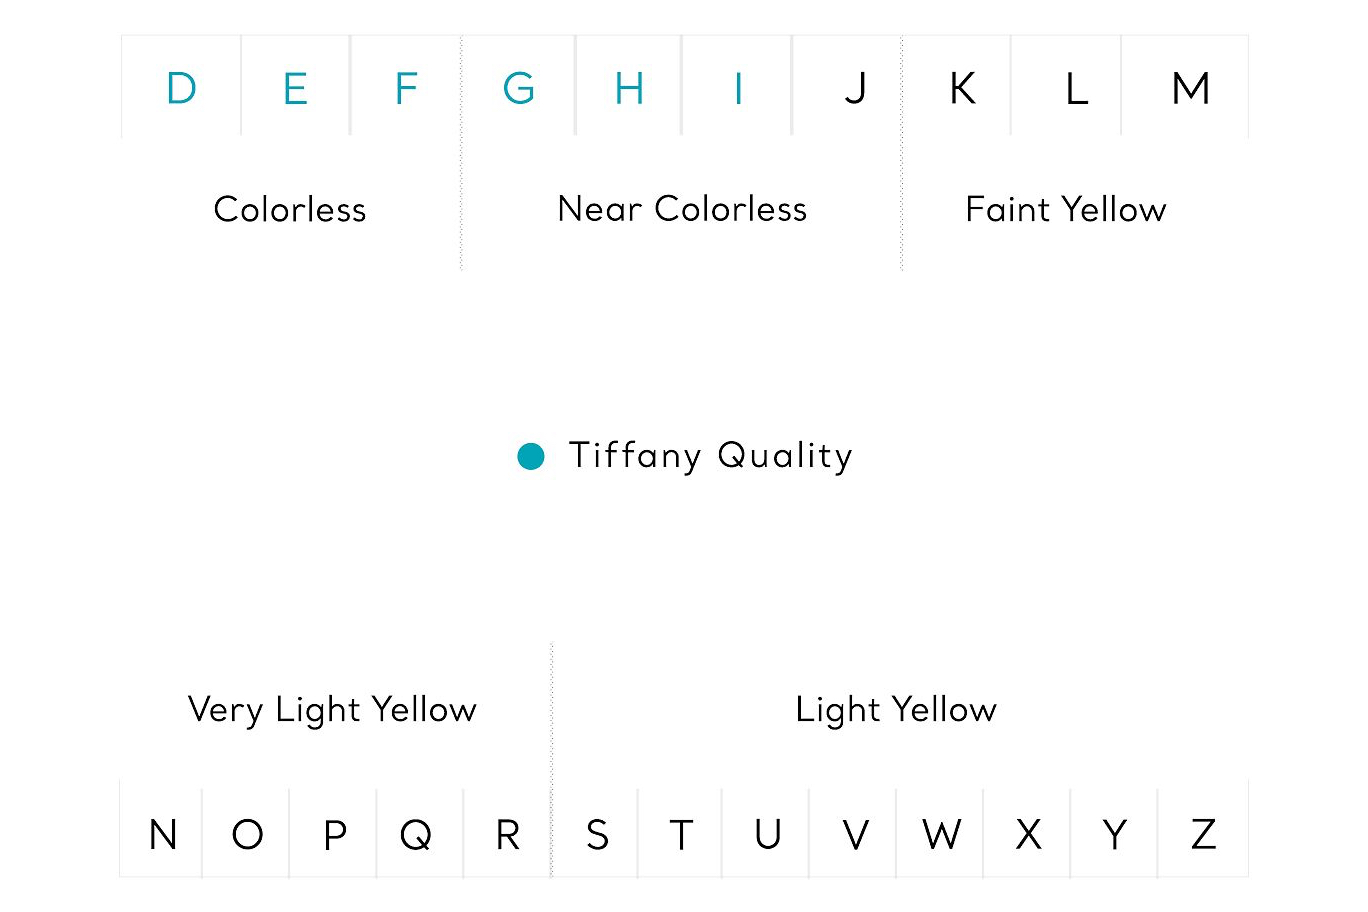 Таблица цветов бриллиантов Tiffany &amp; Co.: DEF &mdash; бесцветный; GHIJ &mdash; почти бесцветный; KLM &mdash; бледно-желтый; NOPQR &mdash; очень светлый желтый; STUVWXYZ &mdash; светло-желтый